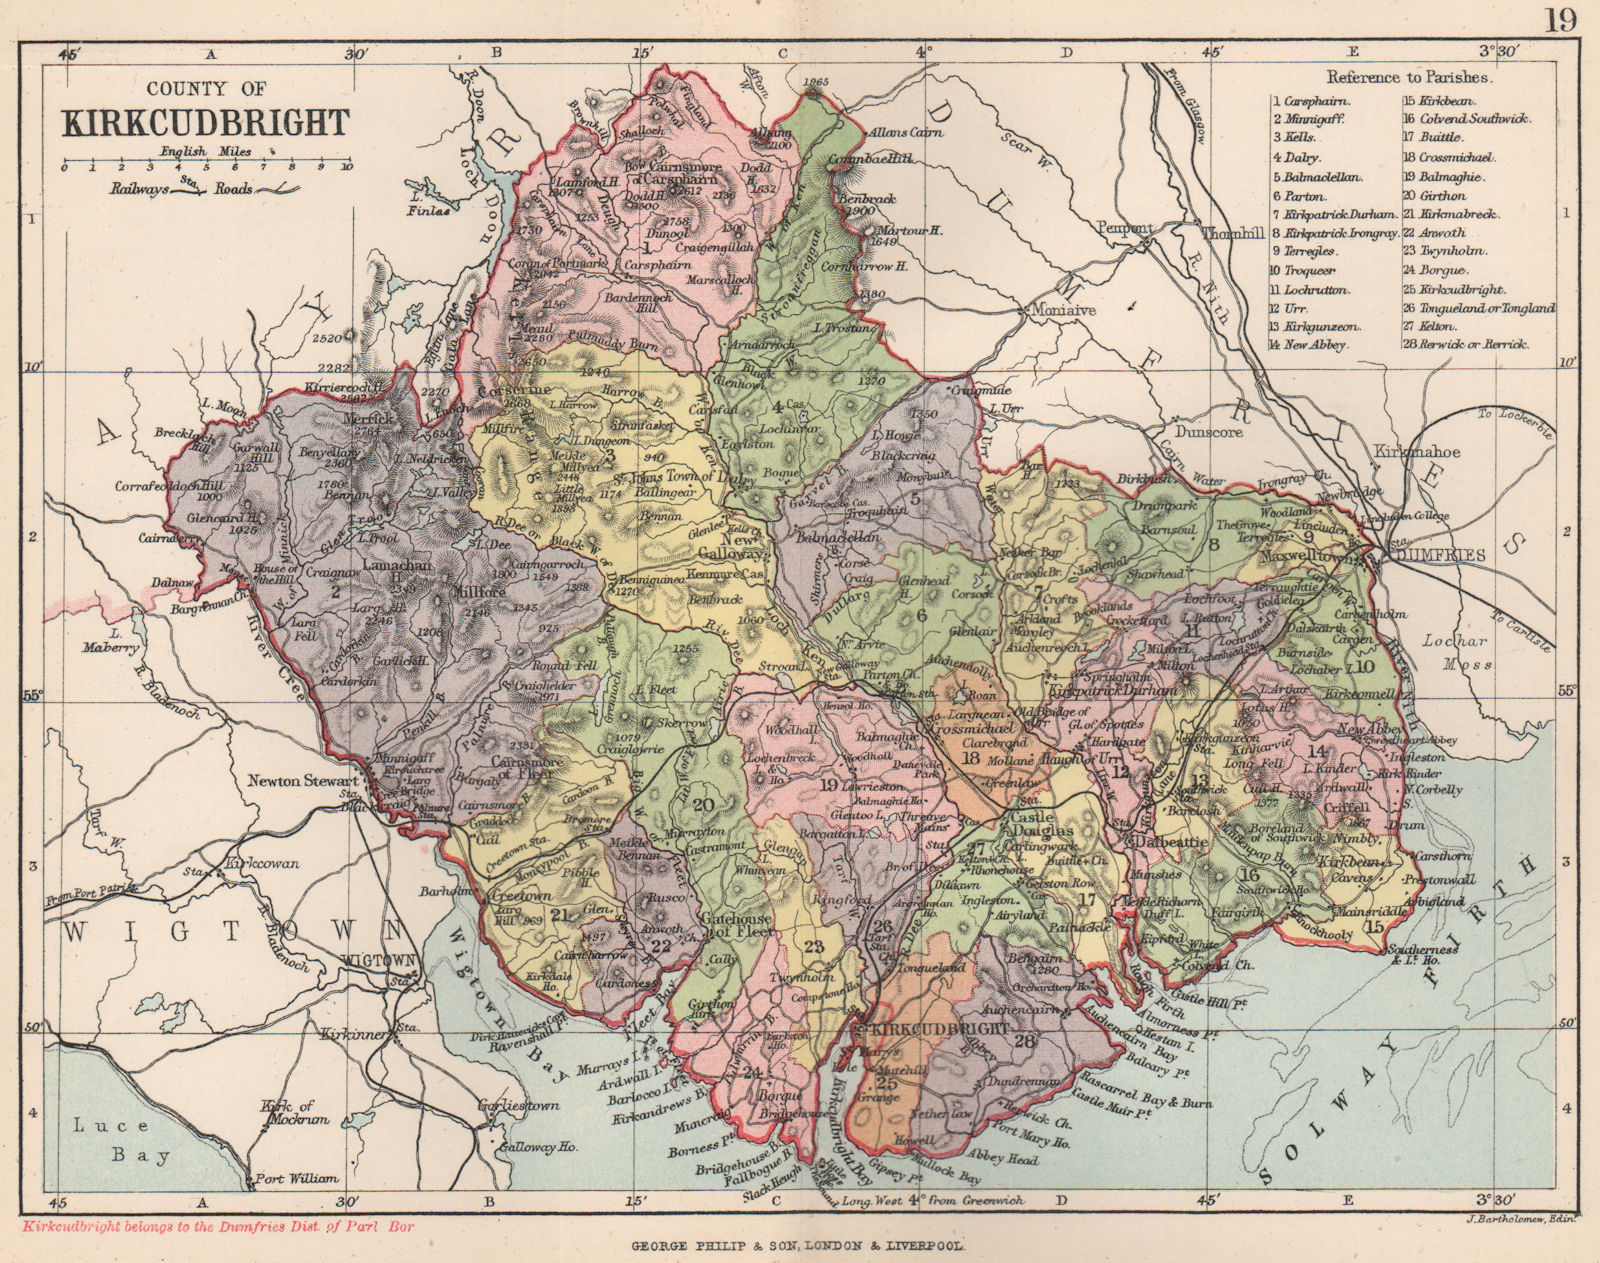 'County of Kirkcudbright'. Kirkcudbrightshire. Parishes. BARTHOLOMEW 1891 map